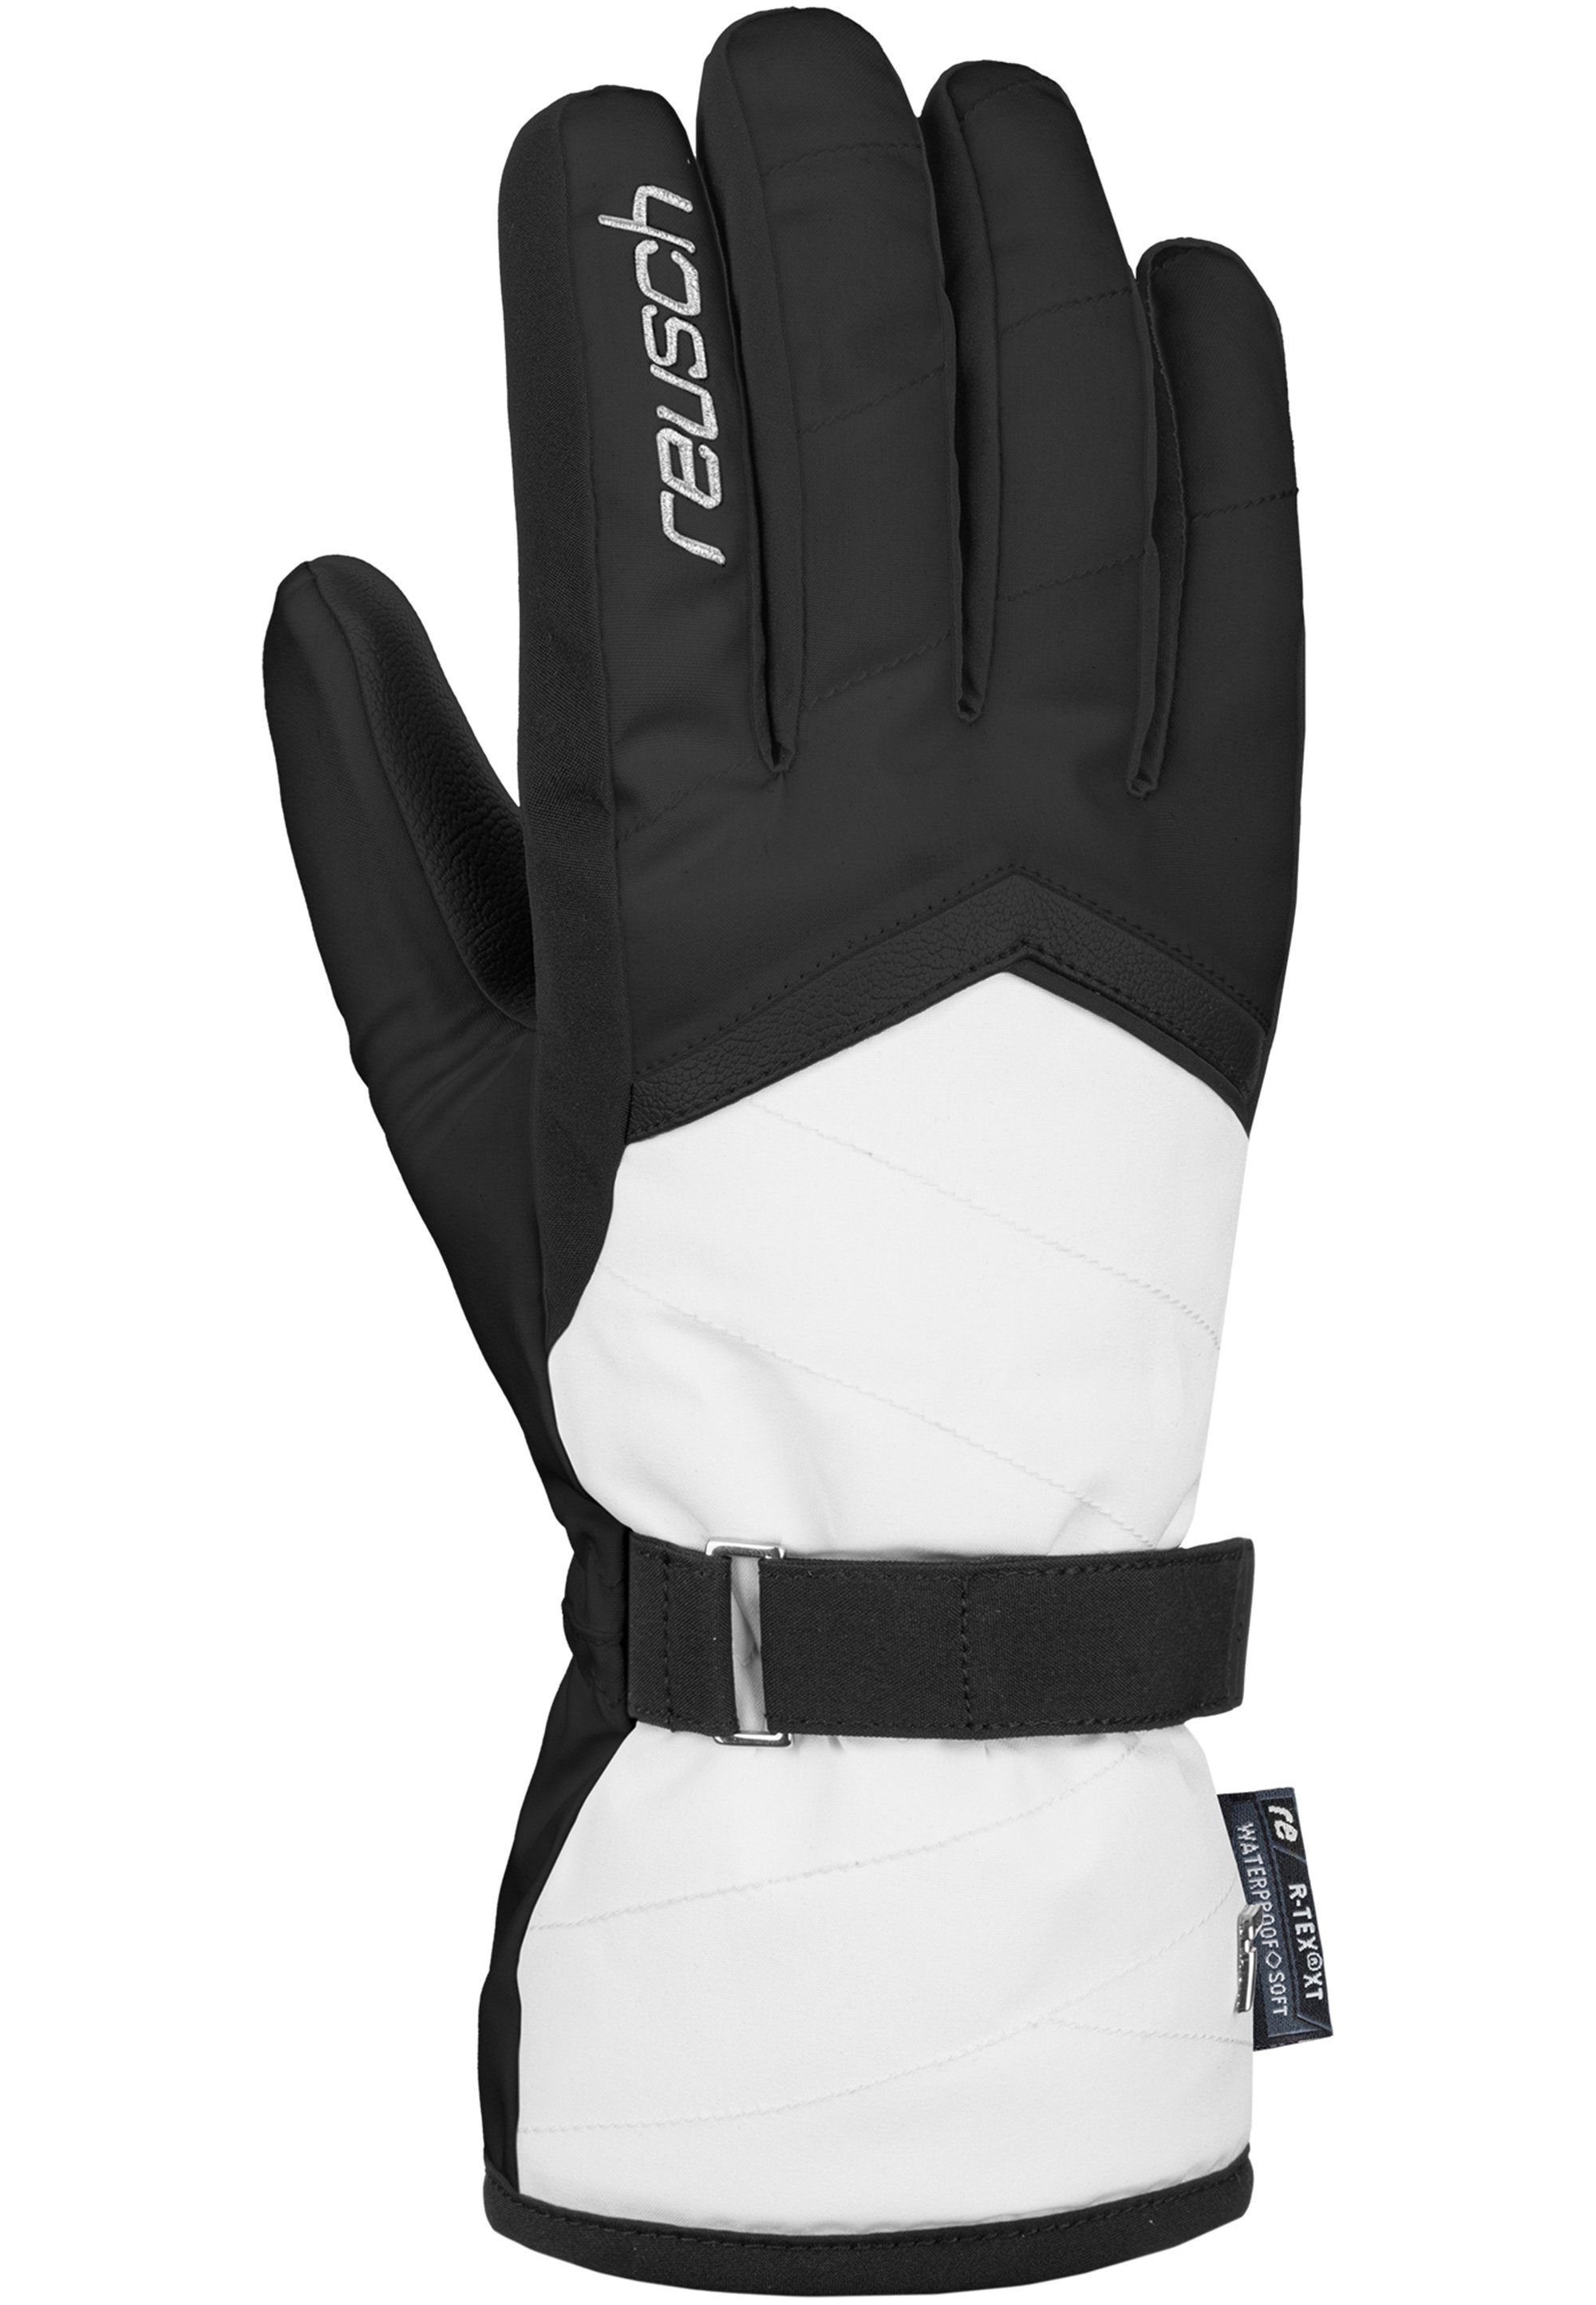 innovativer XT R-TEX® schwarz-weiß Skihandschuhe Moni mit Reusch Insert-Membran